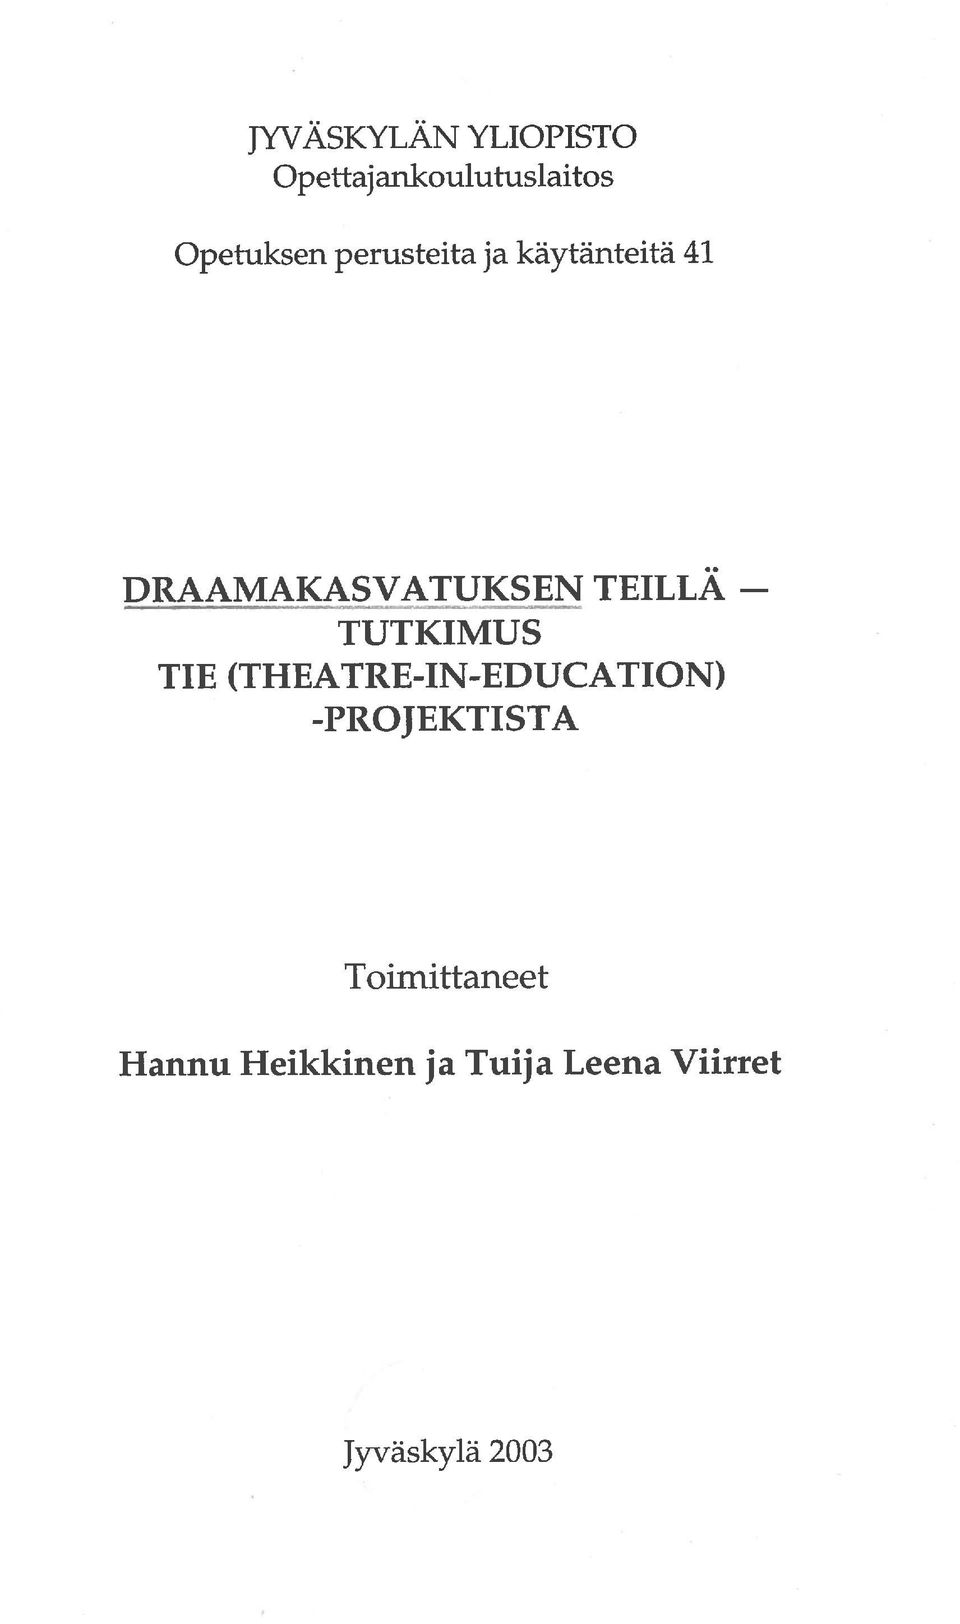 TUTKIMUS TIE (THEATRE-IN-EDUCATION) -PROJEKTISTA